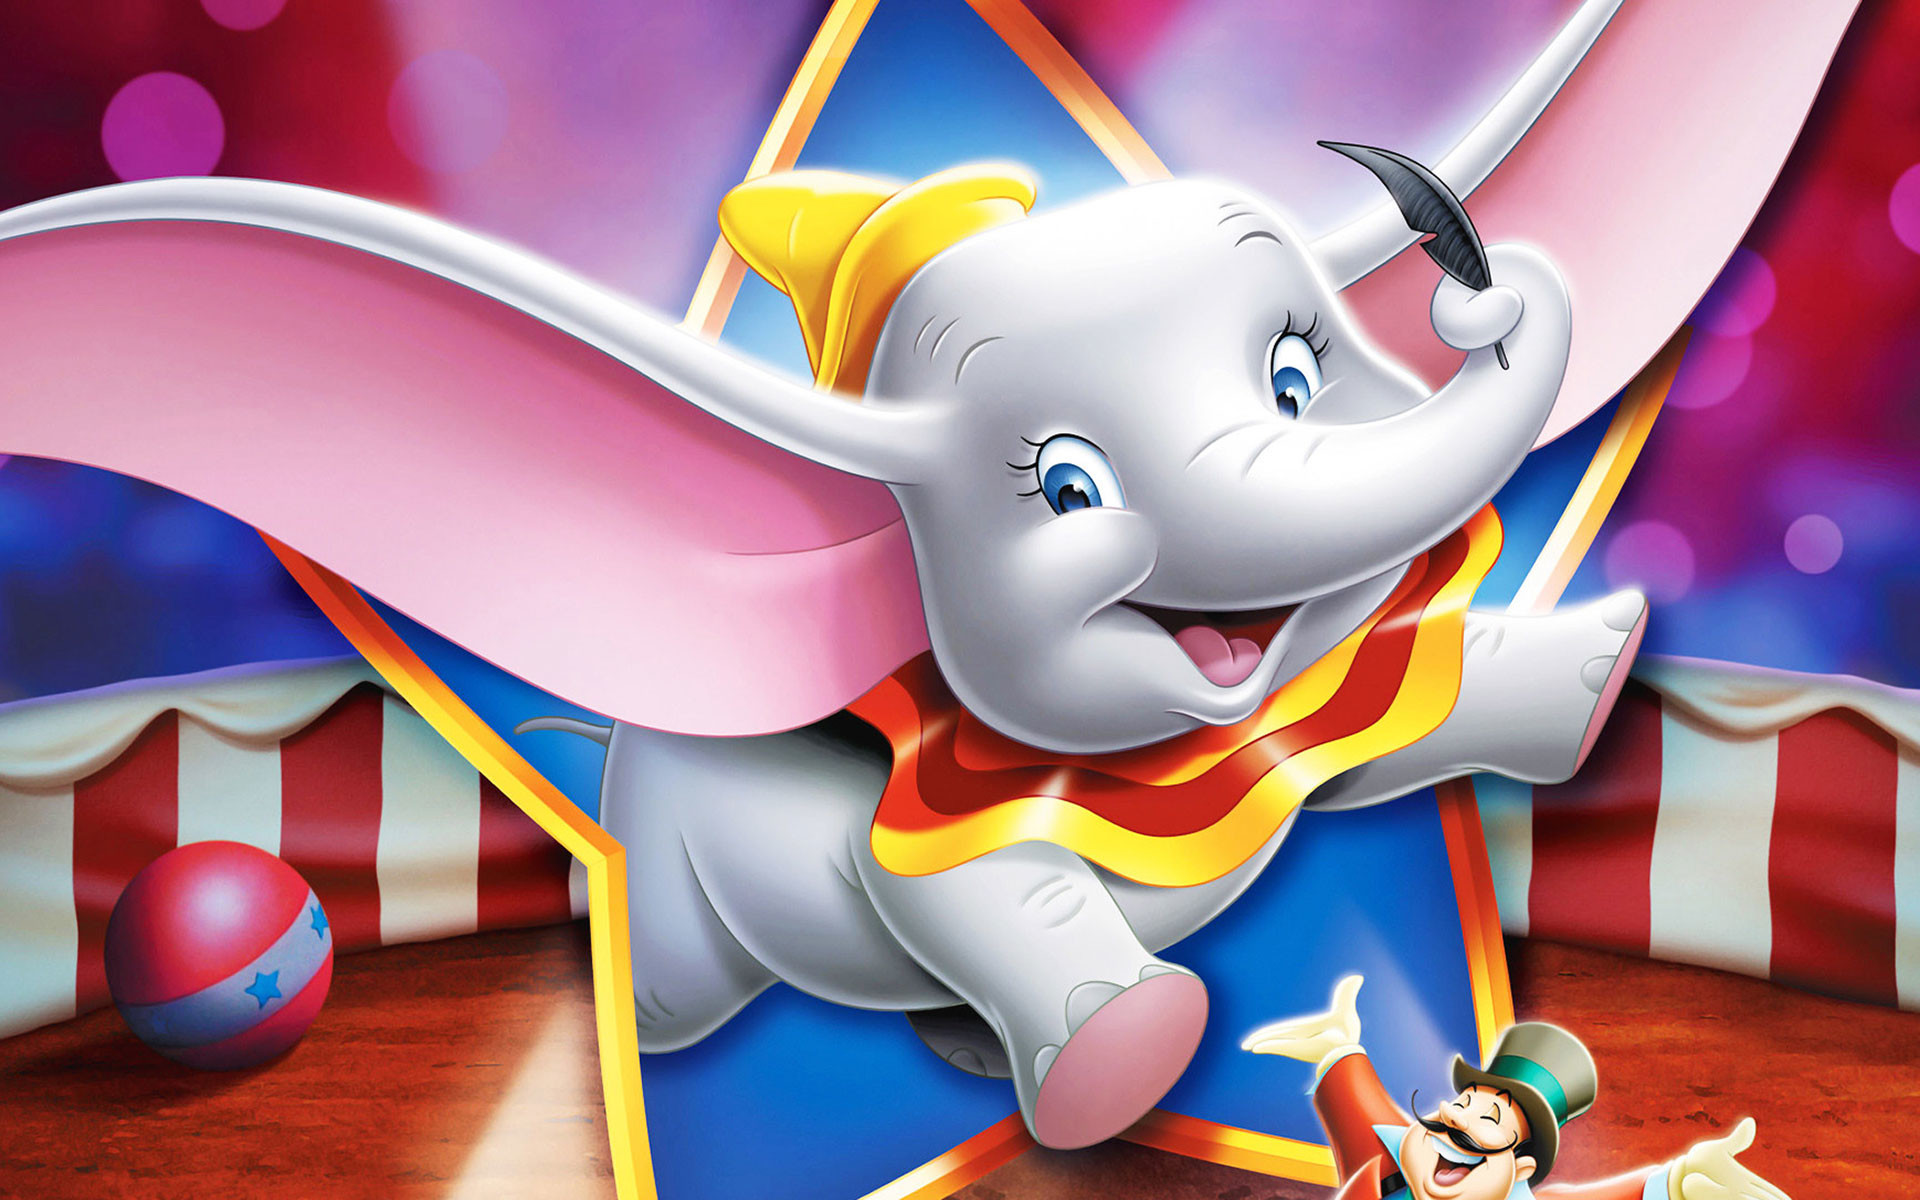 1920x1200 Disney Dumbo Cartoon Wallpaper Image for iPhone 6. Disney Dumbo